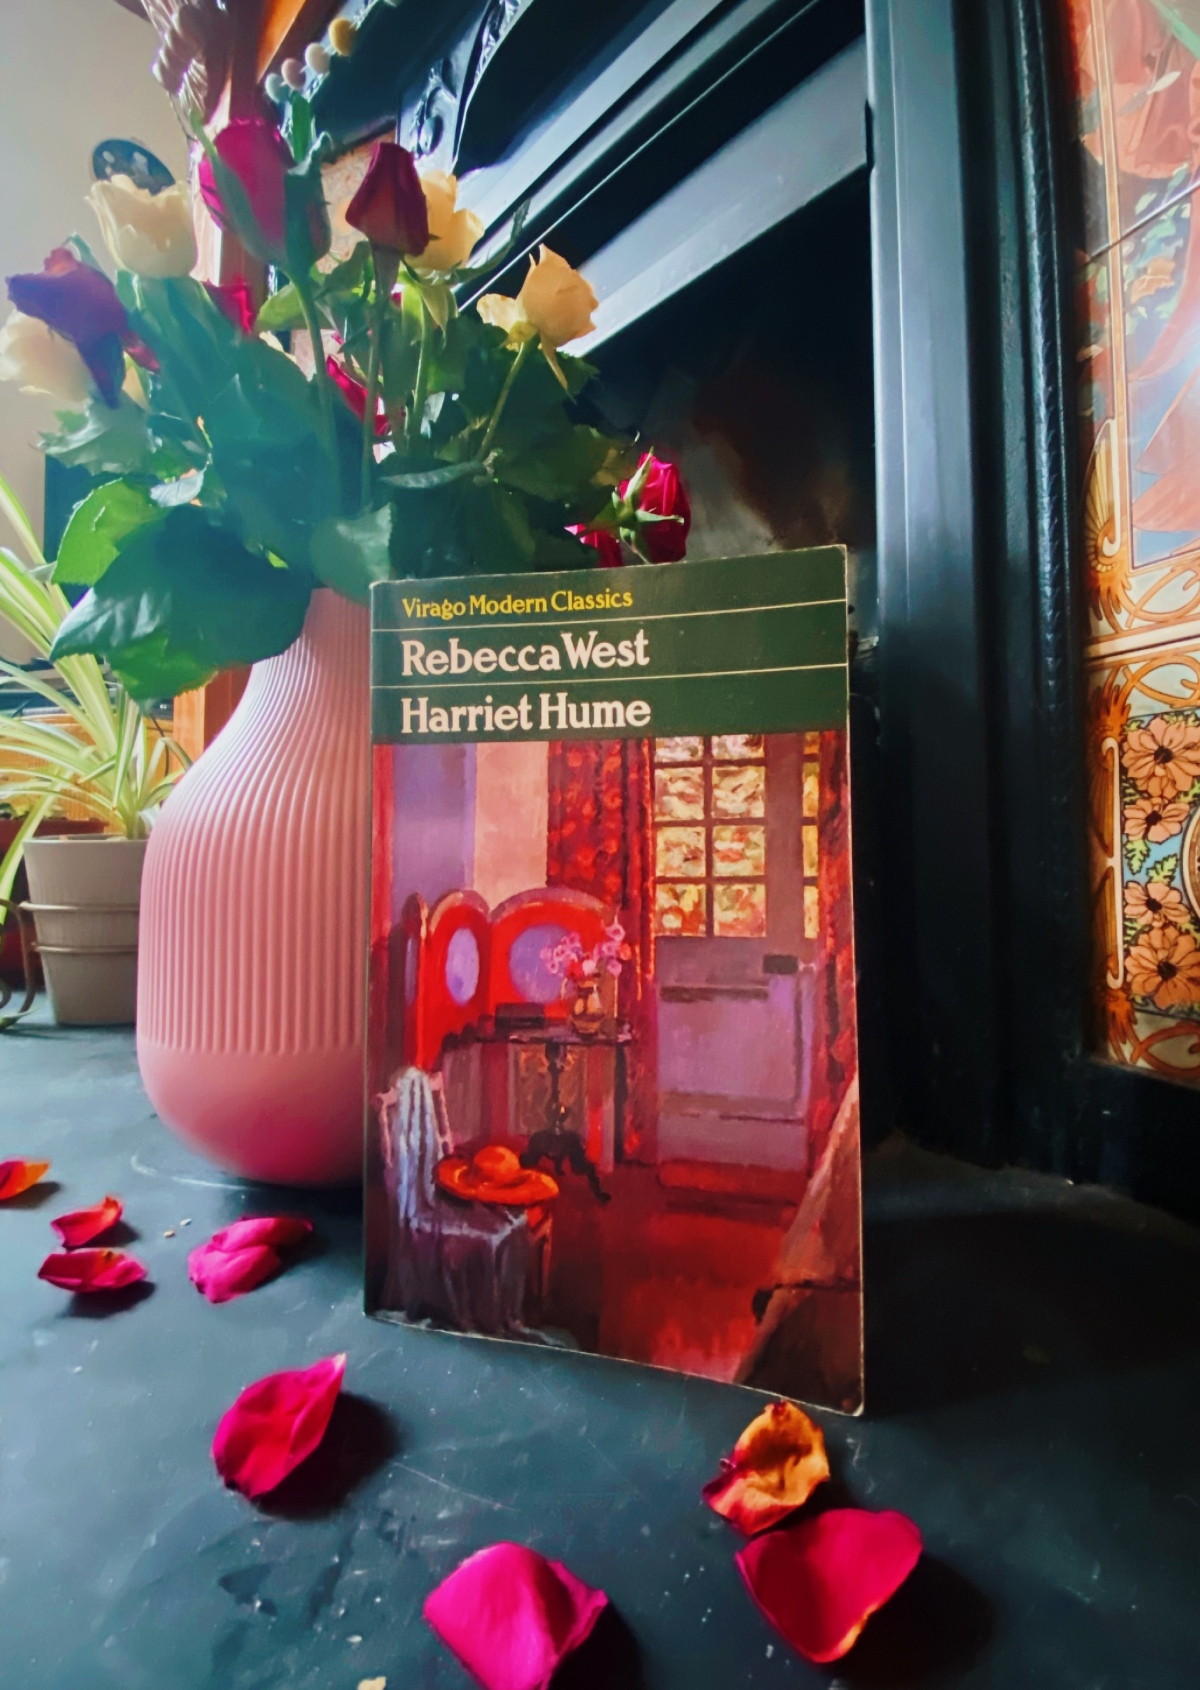 Harriet Hume: A London Fantasy, Rebecca West (VMC 34)